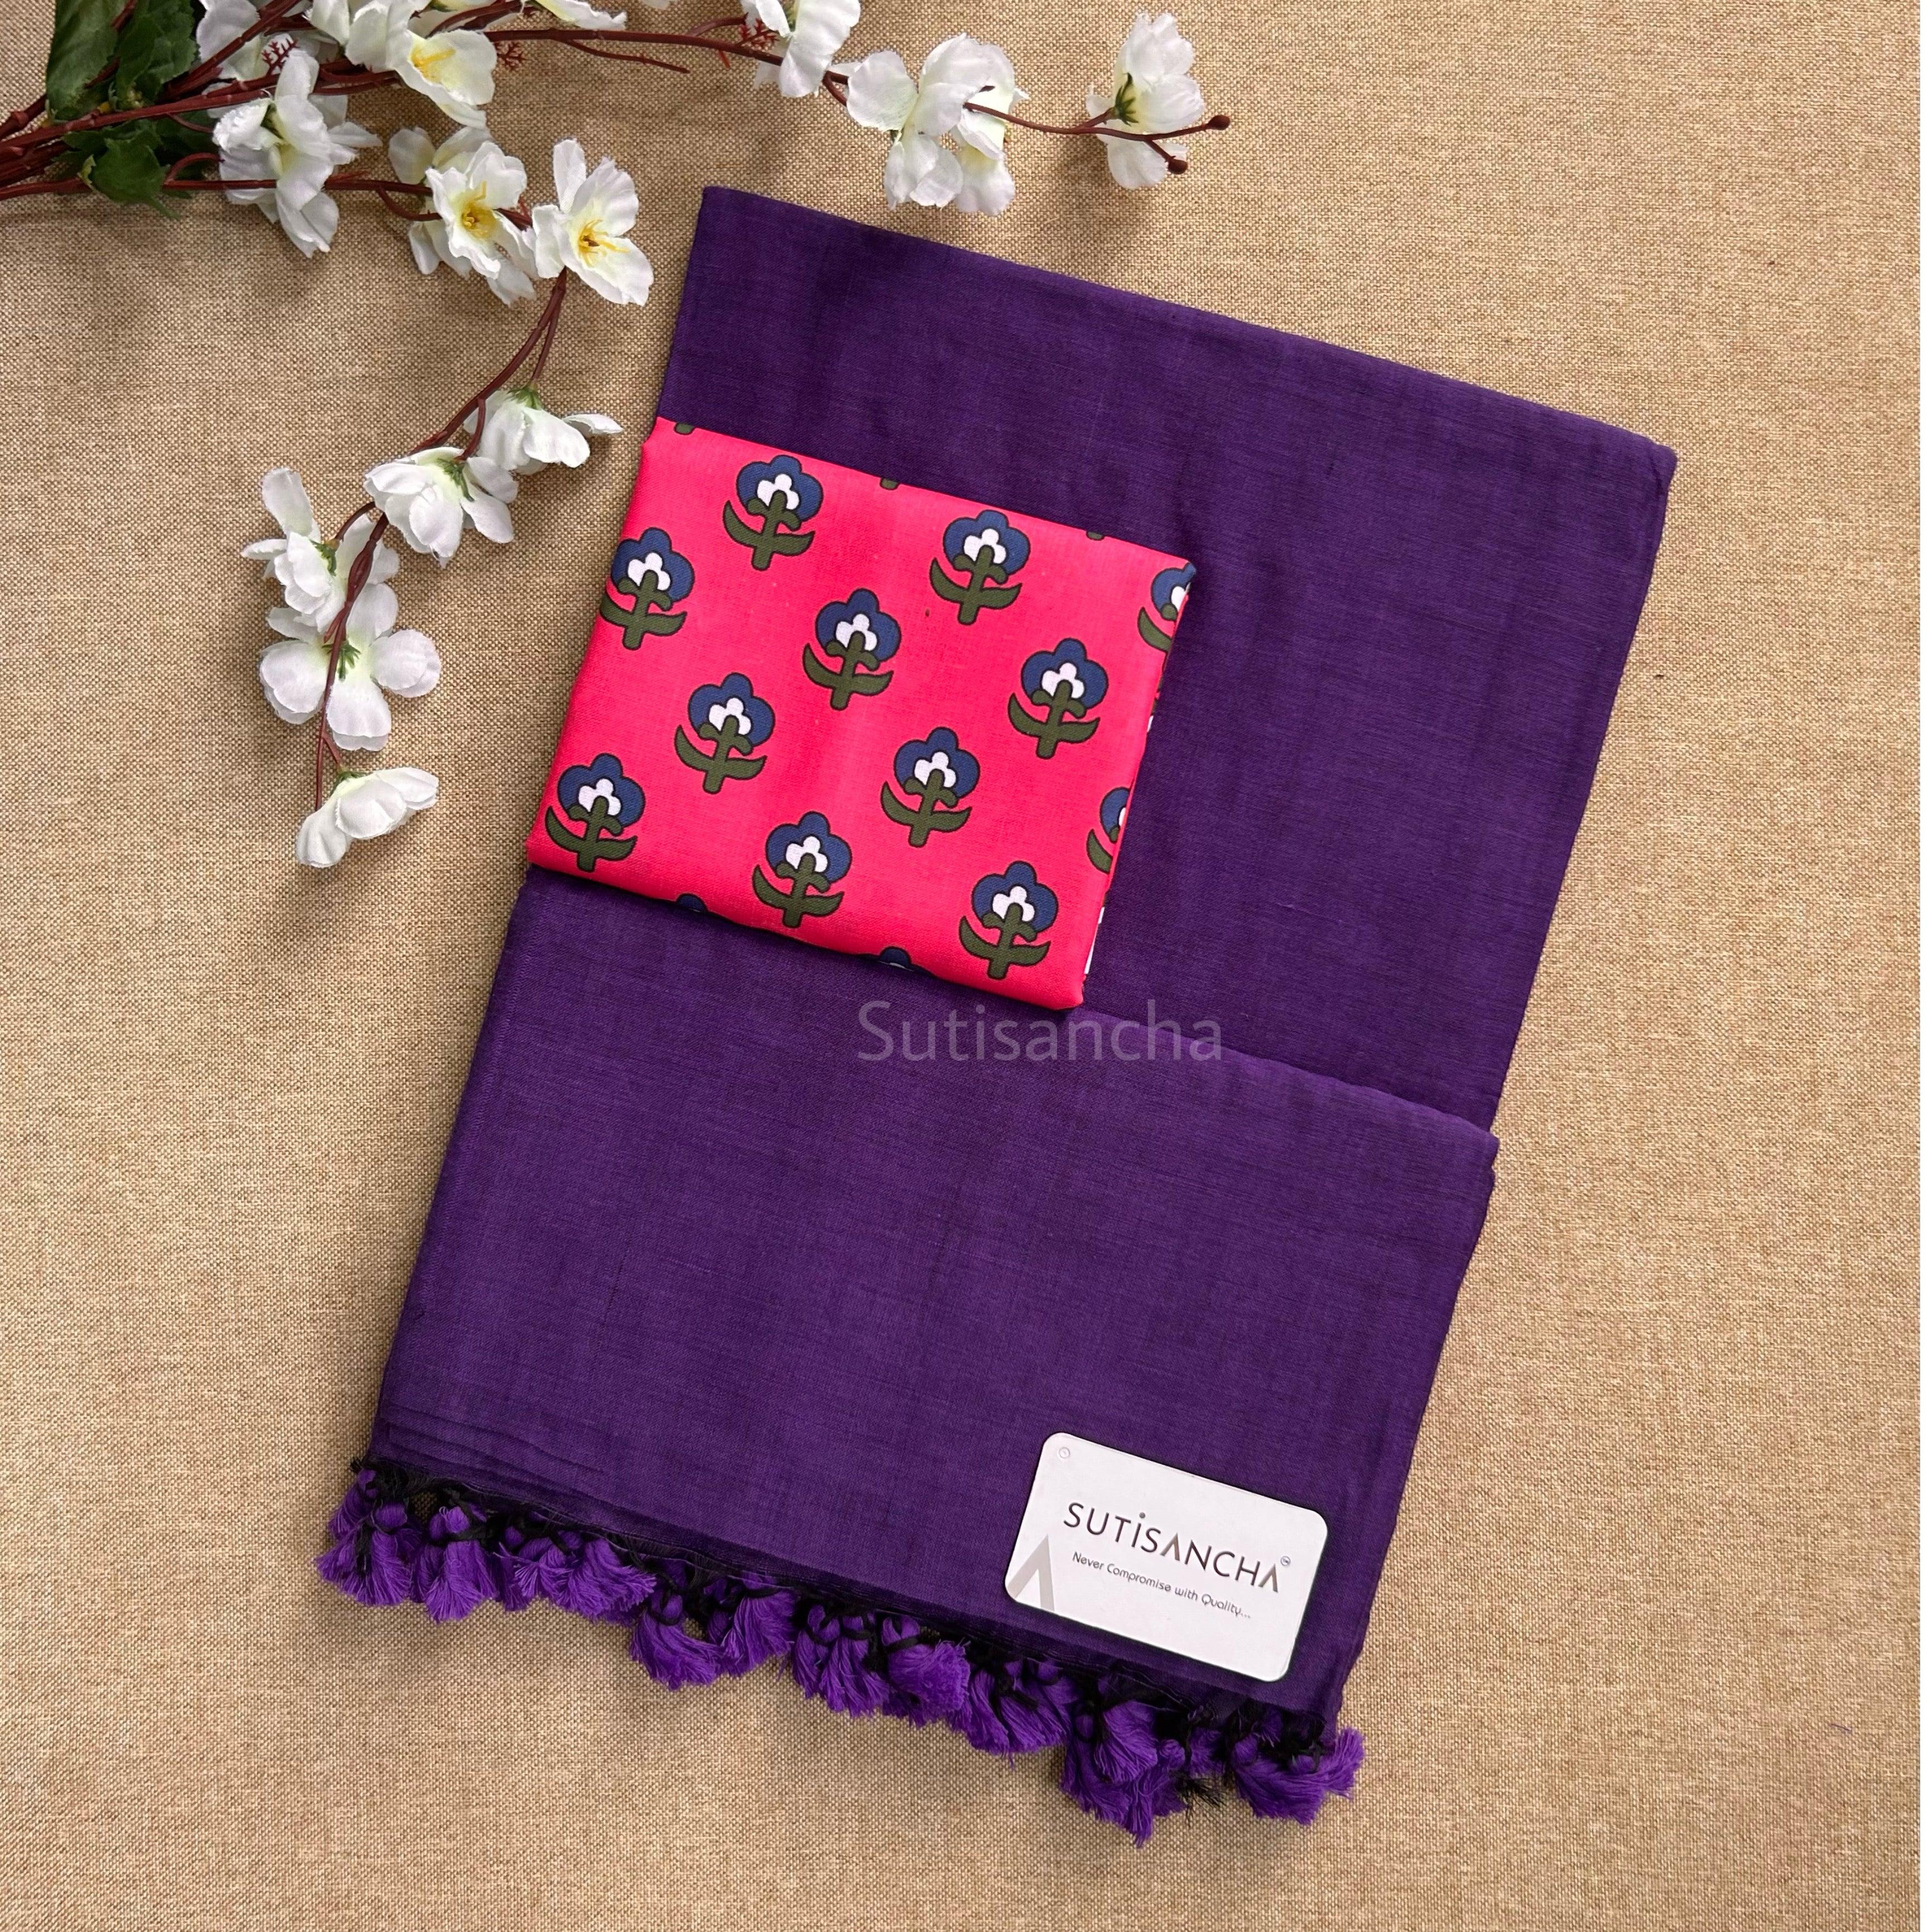 Sutisancha purple Plain Khadi with Pink Design Blouse - Suti Sancha